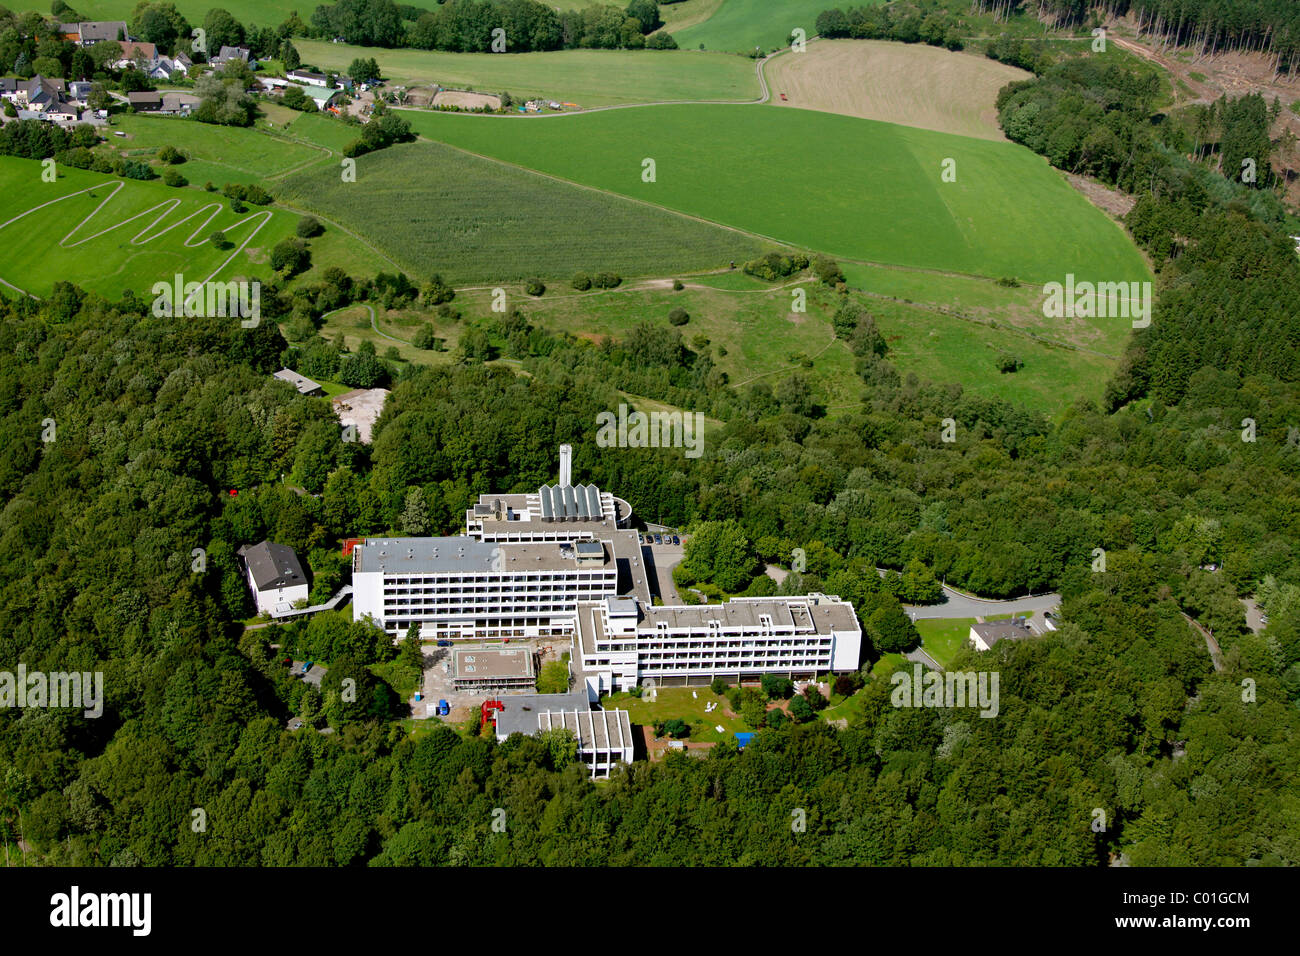 Vue aérienne, Klinik Koenigsfeld, centre médical de l'hôpital, Windgarten, Ennepetal, Nordrhein-Westfalen, Germany, Europe Banque D'Images